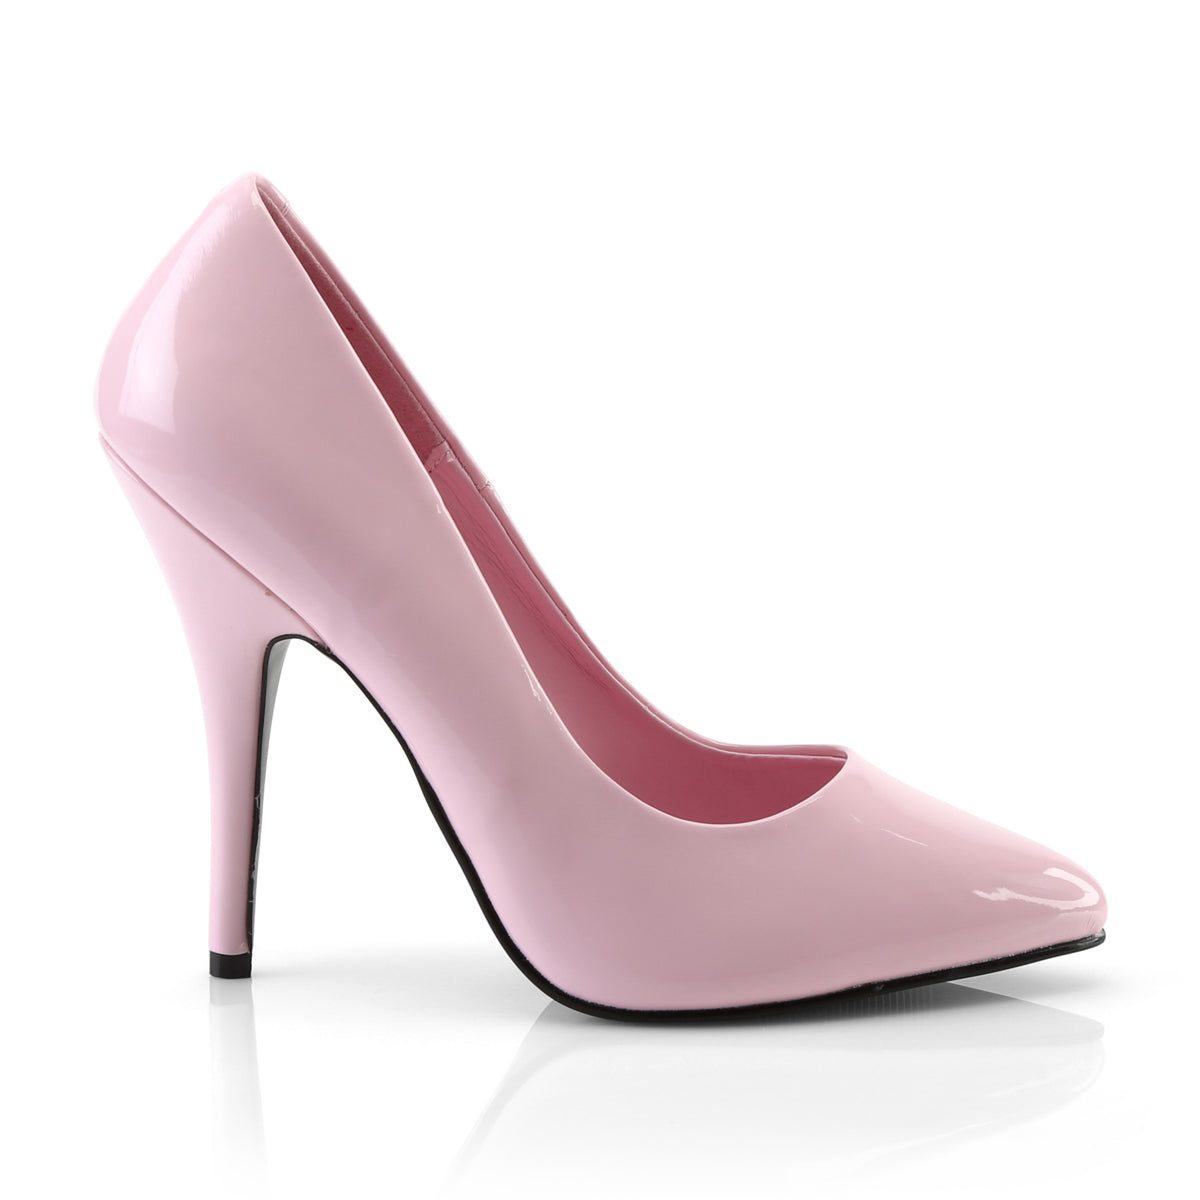 SEDUCE-420 Sexy Shoes 5" Heel Baby Pink Fetish Footwear-Pleaser- Sexy Shoes Fetish Heels